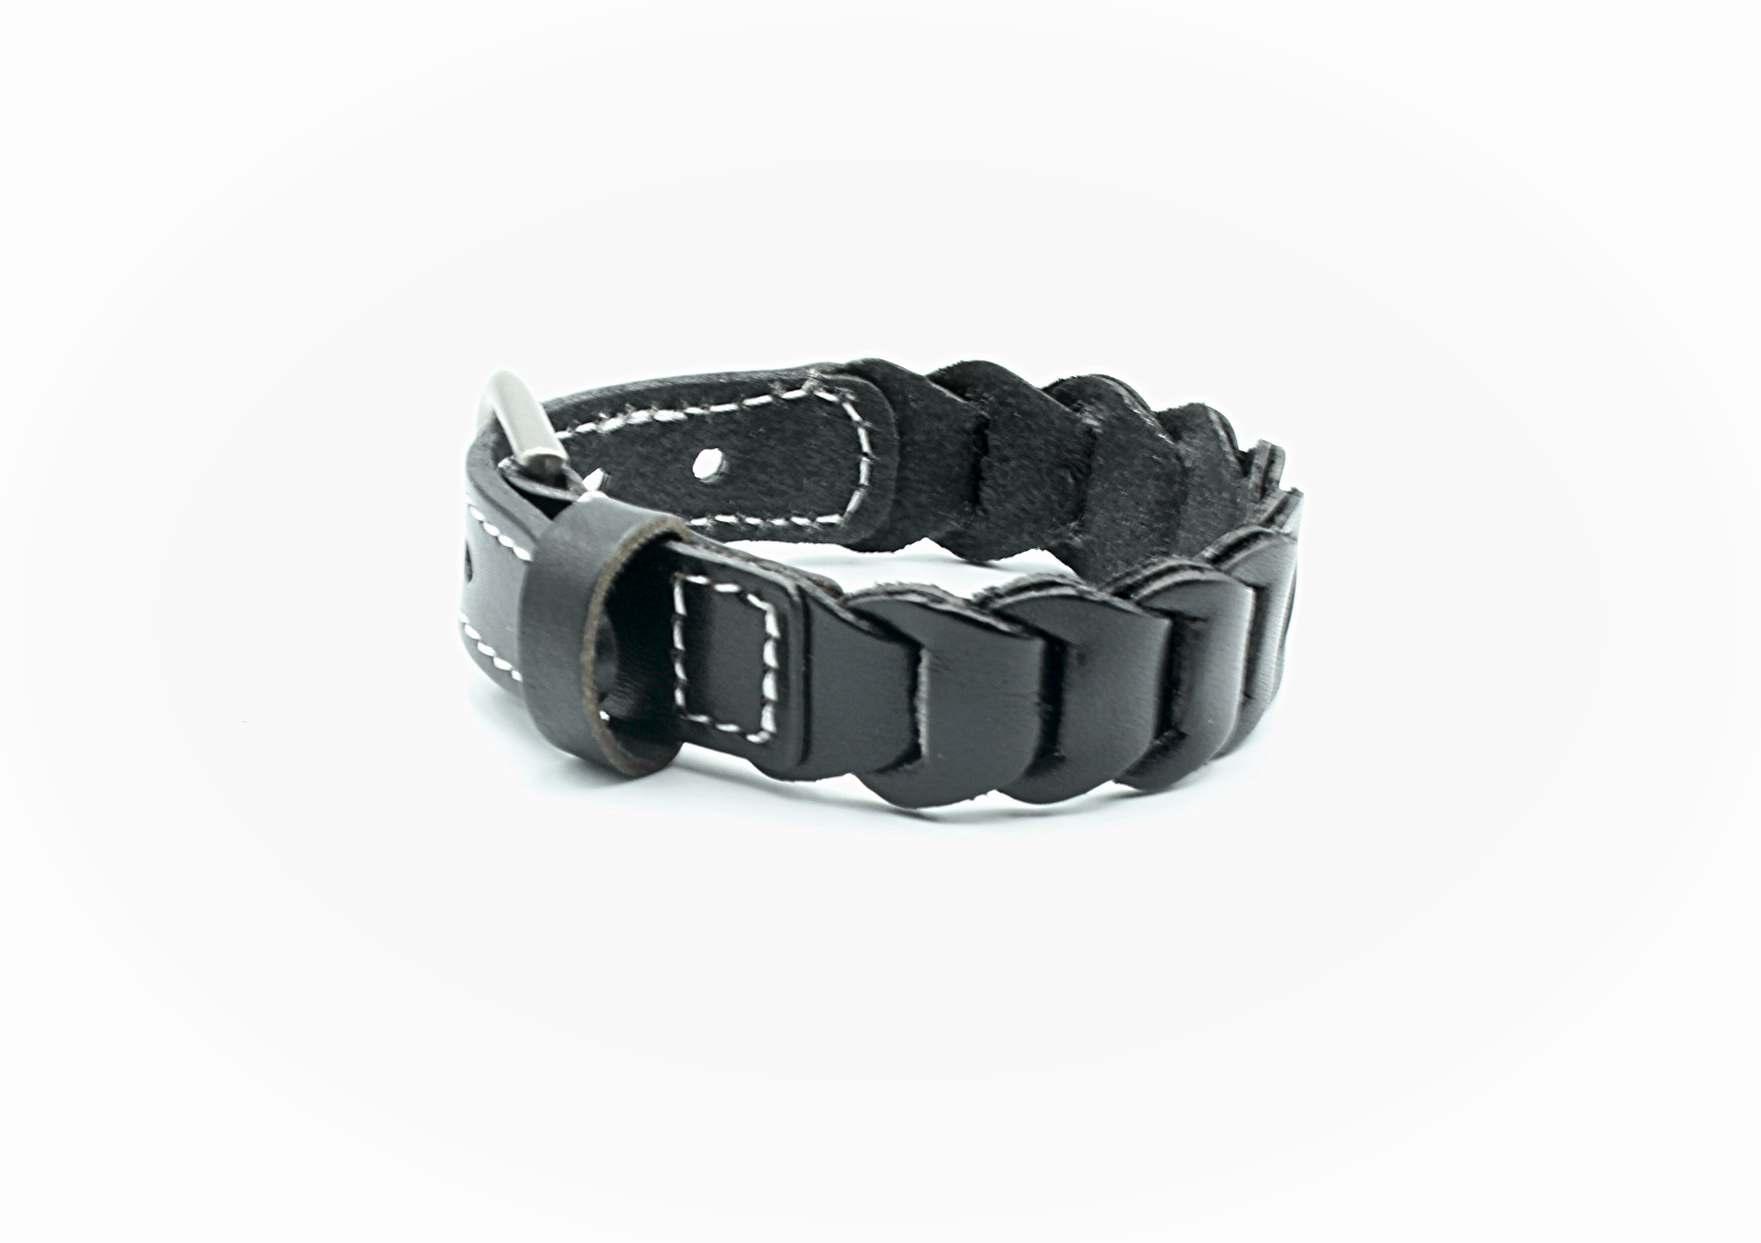 Leather adjustable bracelets from Chrissie C